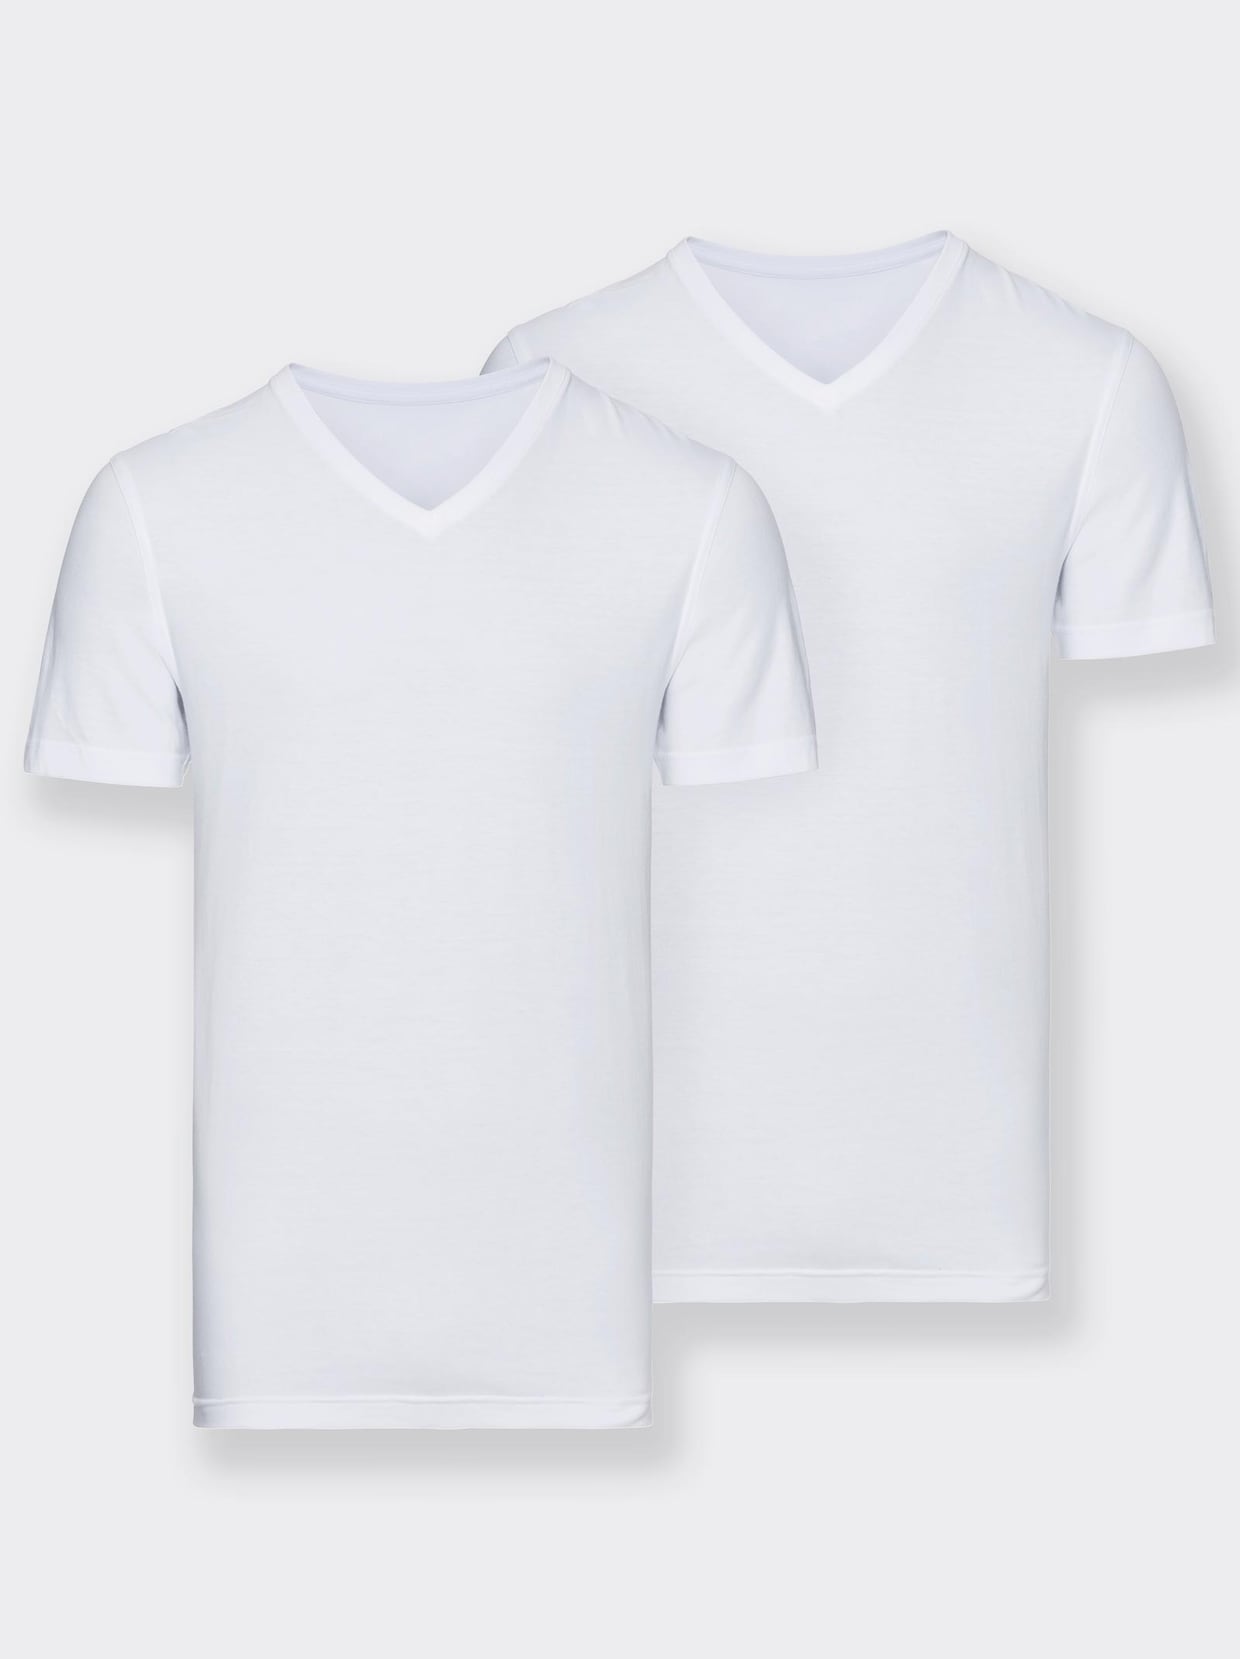 bugatti Shirt - 2 stuks wit